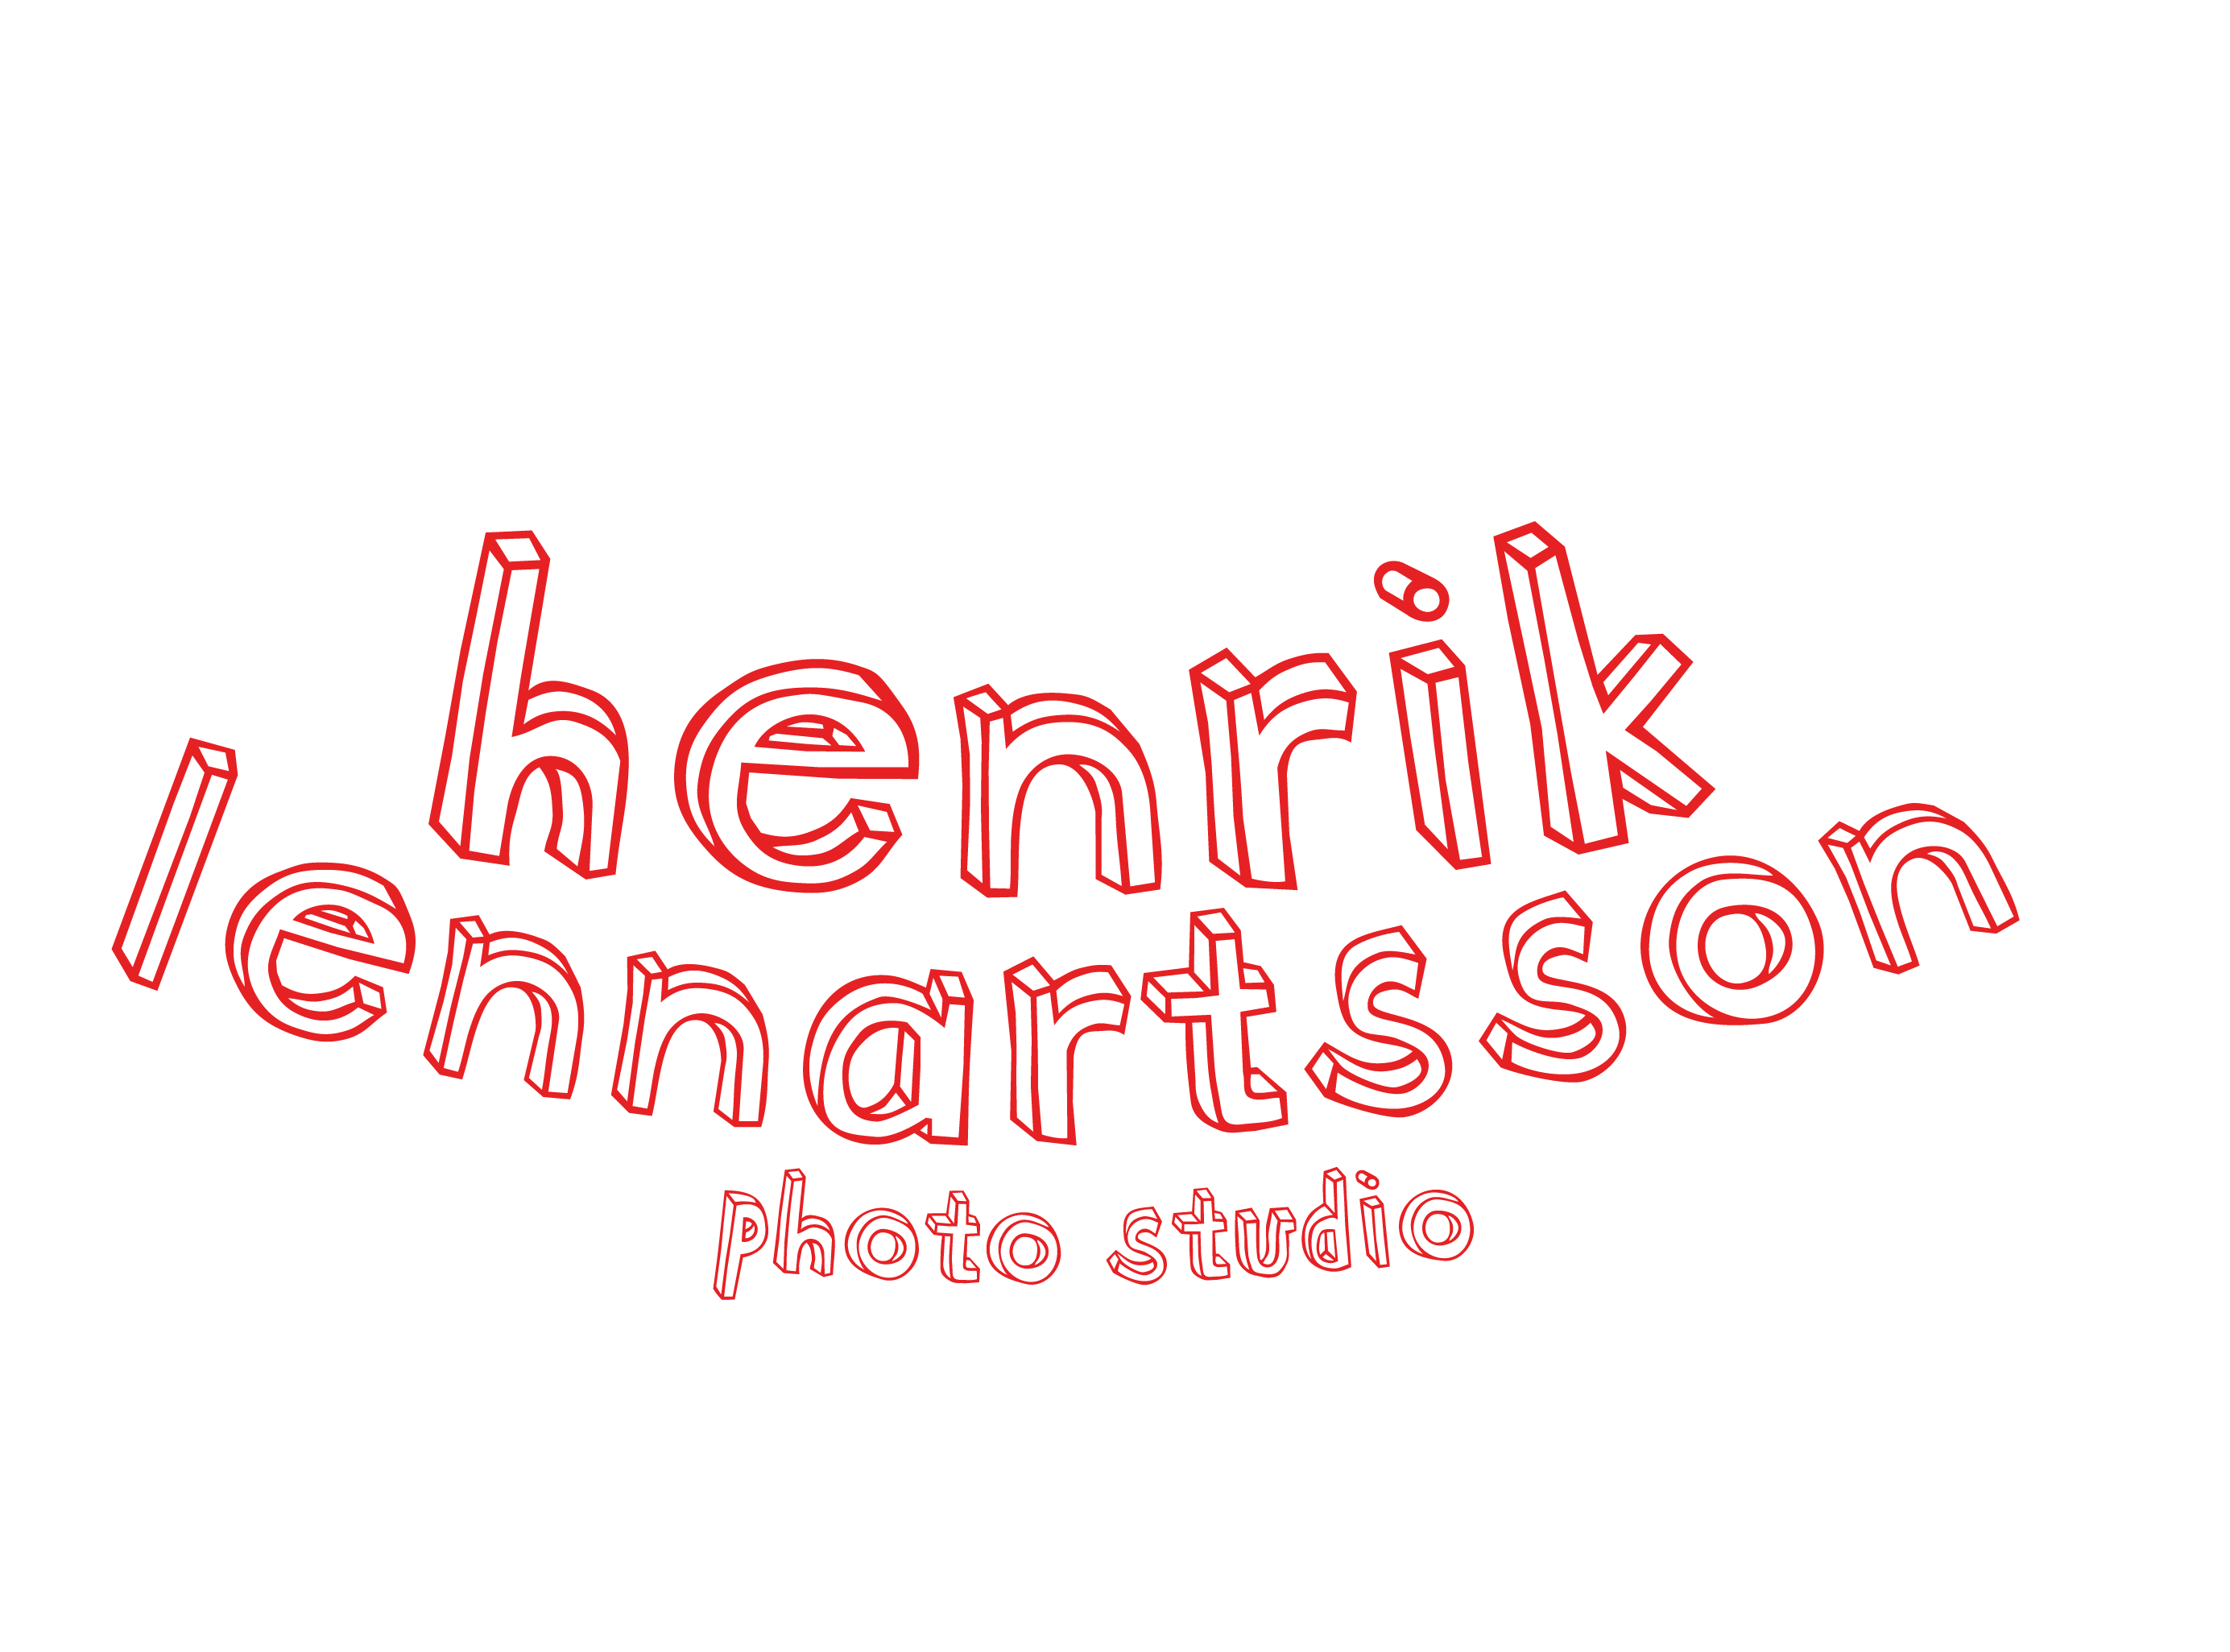 Henrik Lennartsson